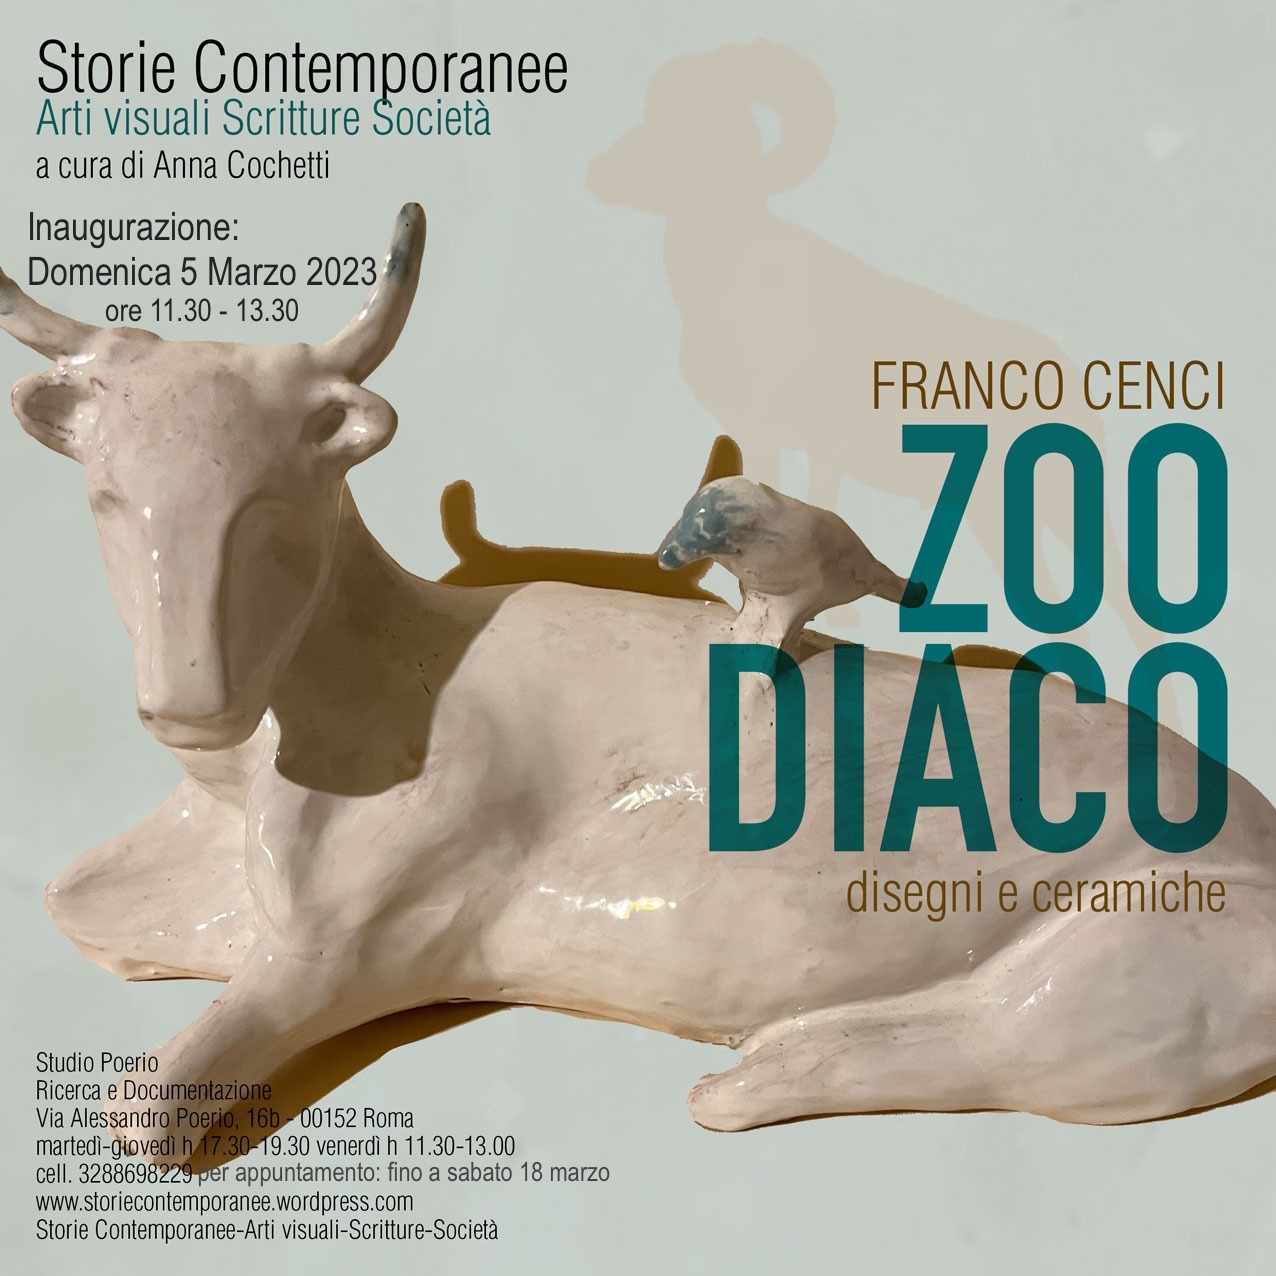 Franco Cenci - Zoo-Diaco